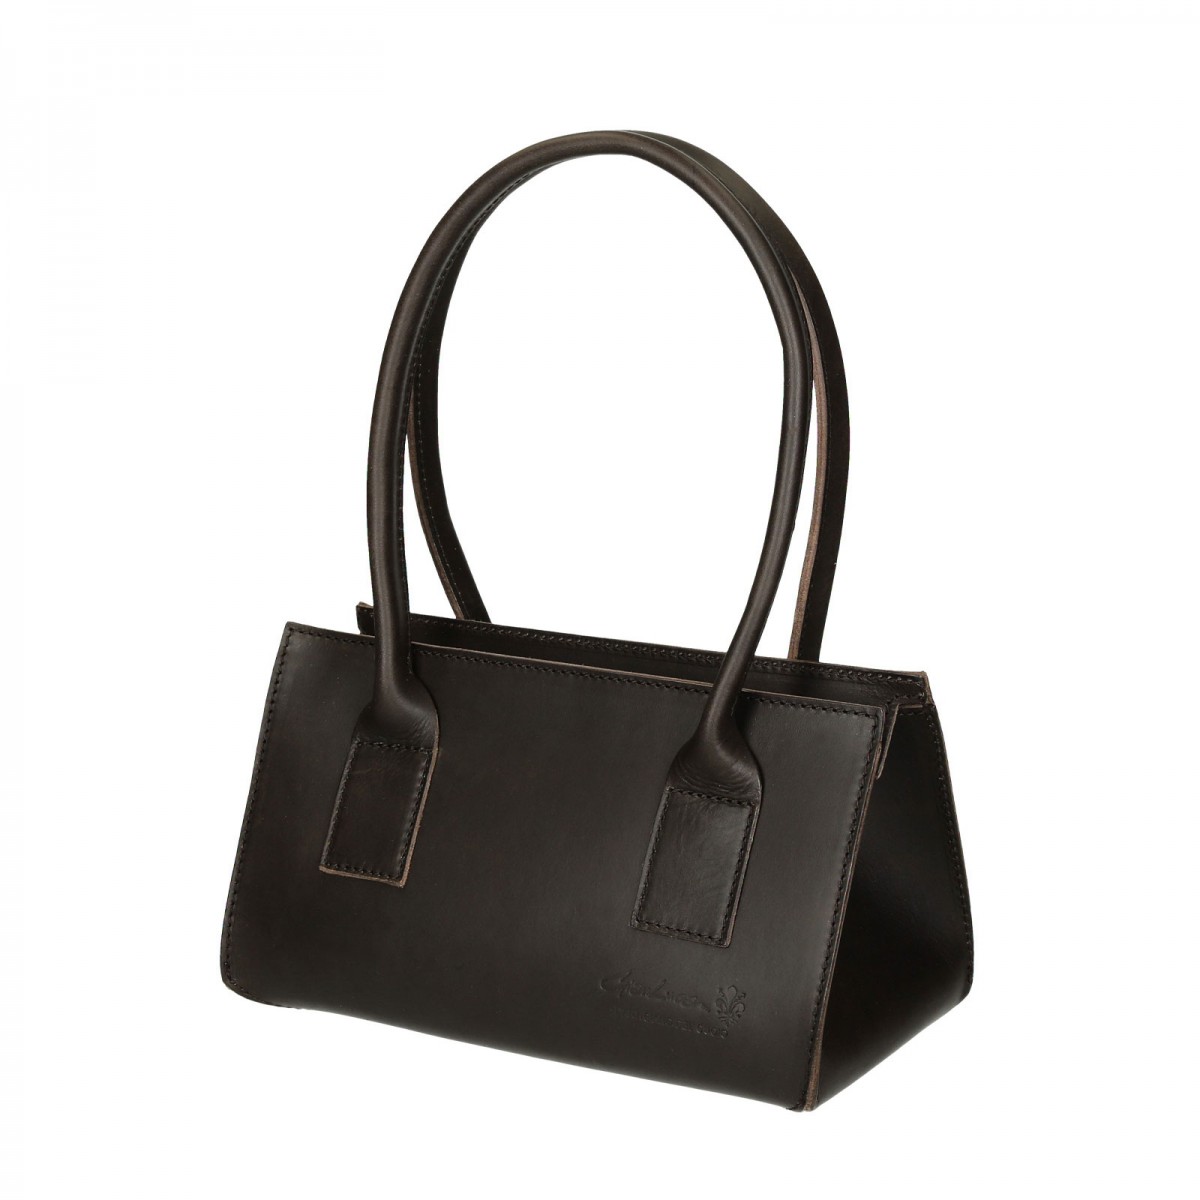 Black leather small handbag for women Handmade | Gianluca - The leather craftsman